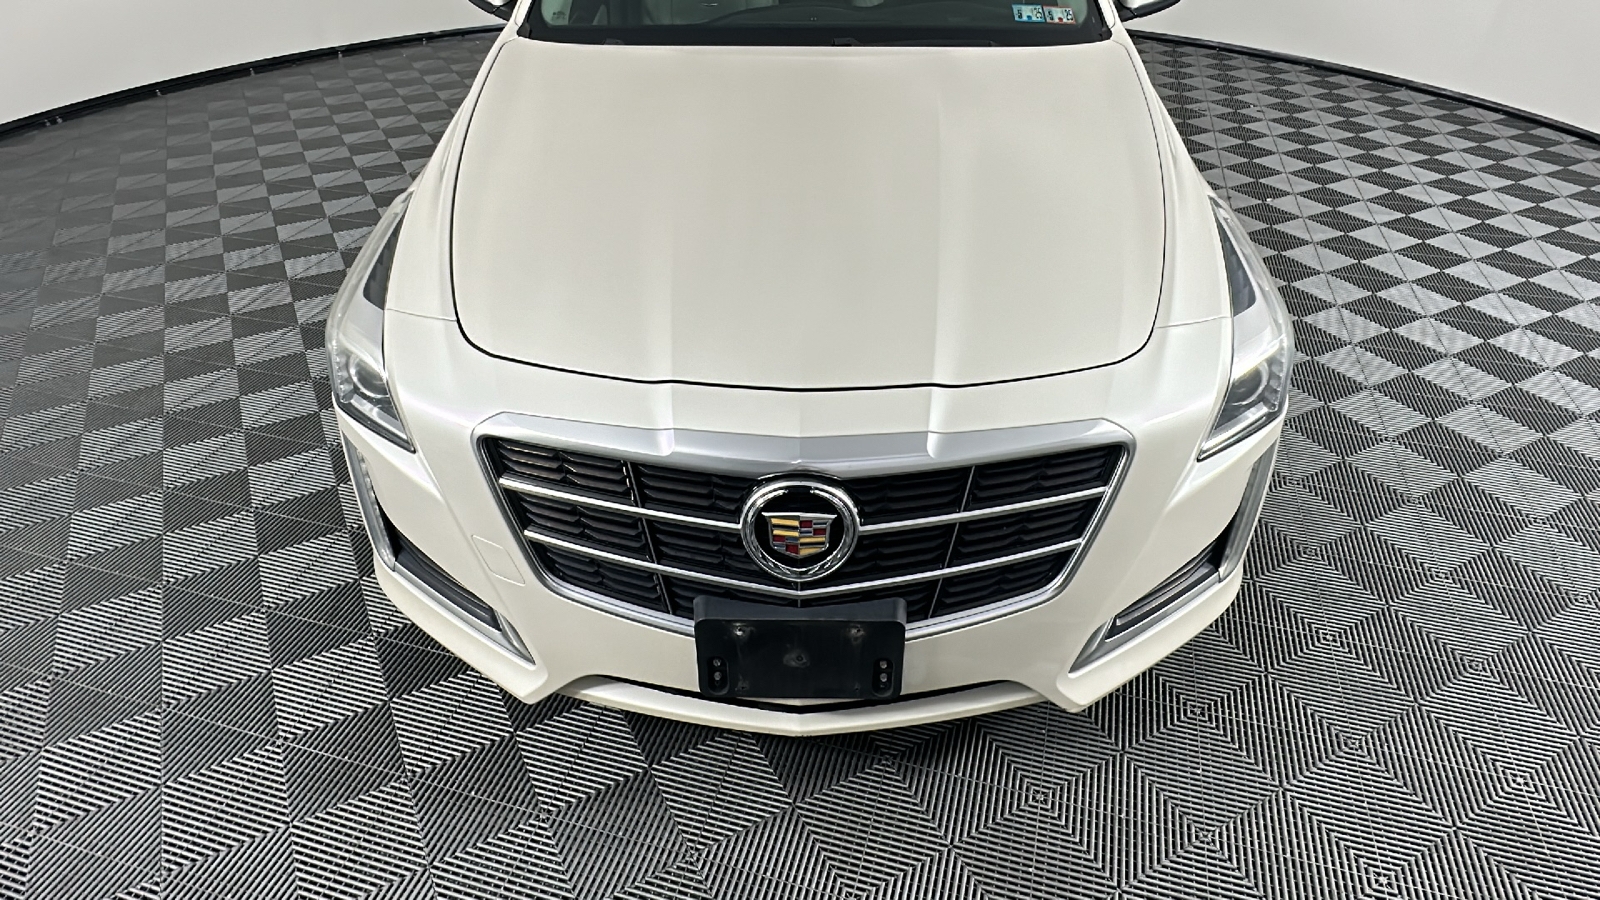 2014 Cadillac CTS 2.0L Turbo Luxury 5